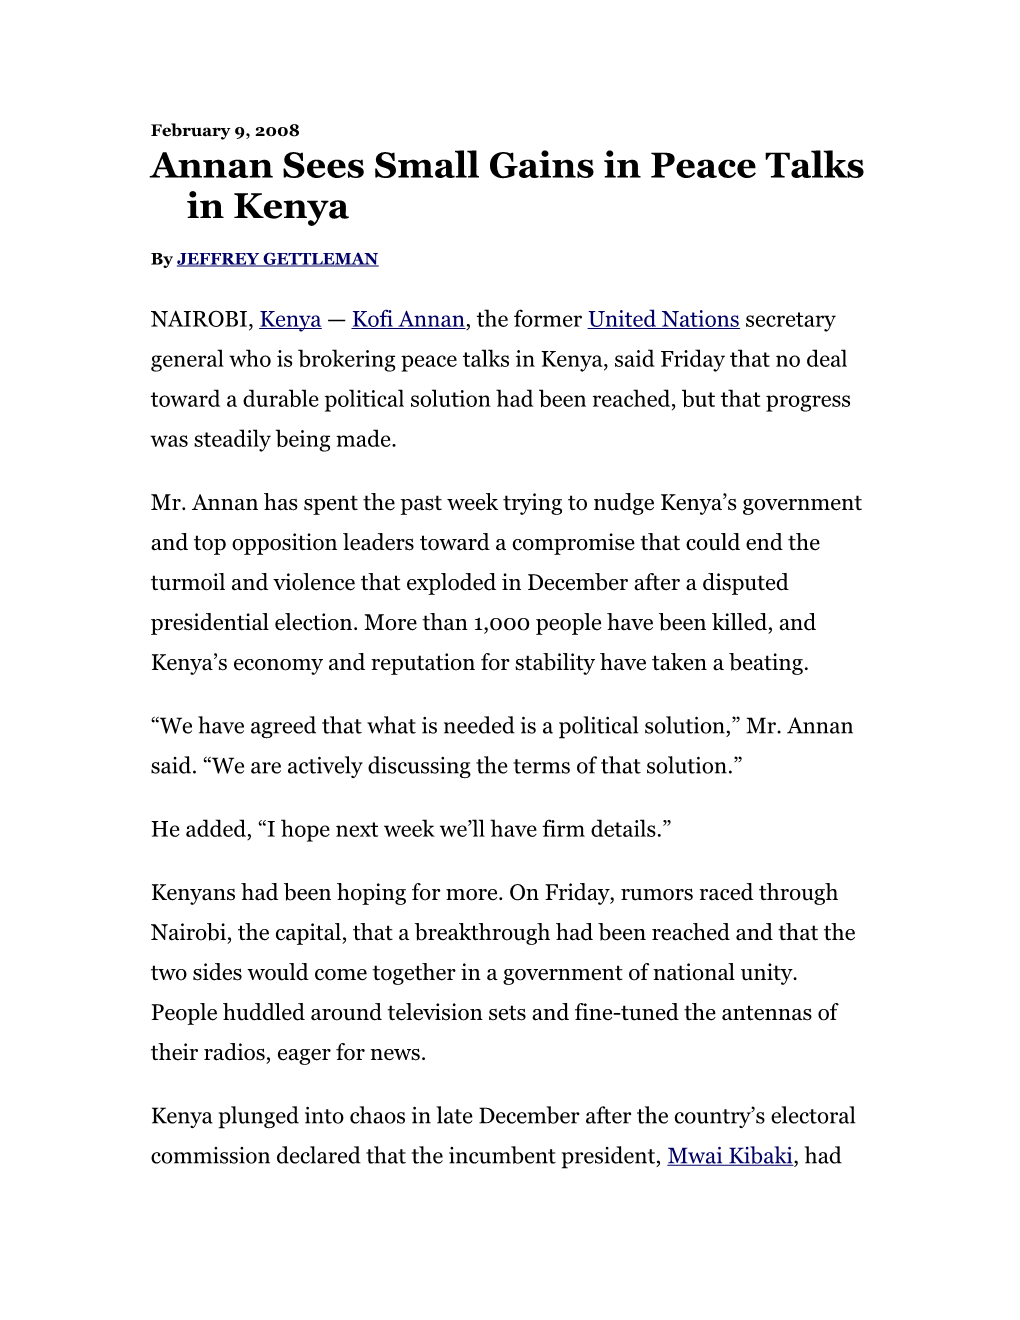 Annan Sees Small Gains in Peace Talks in Kenya